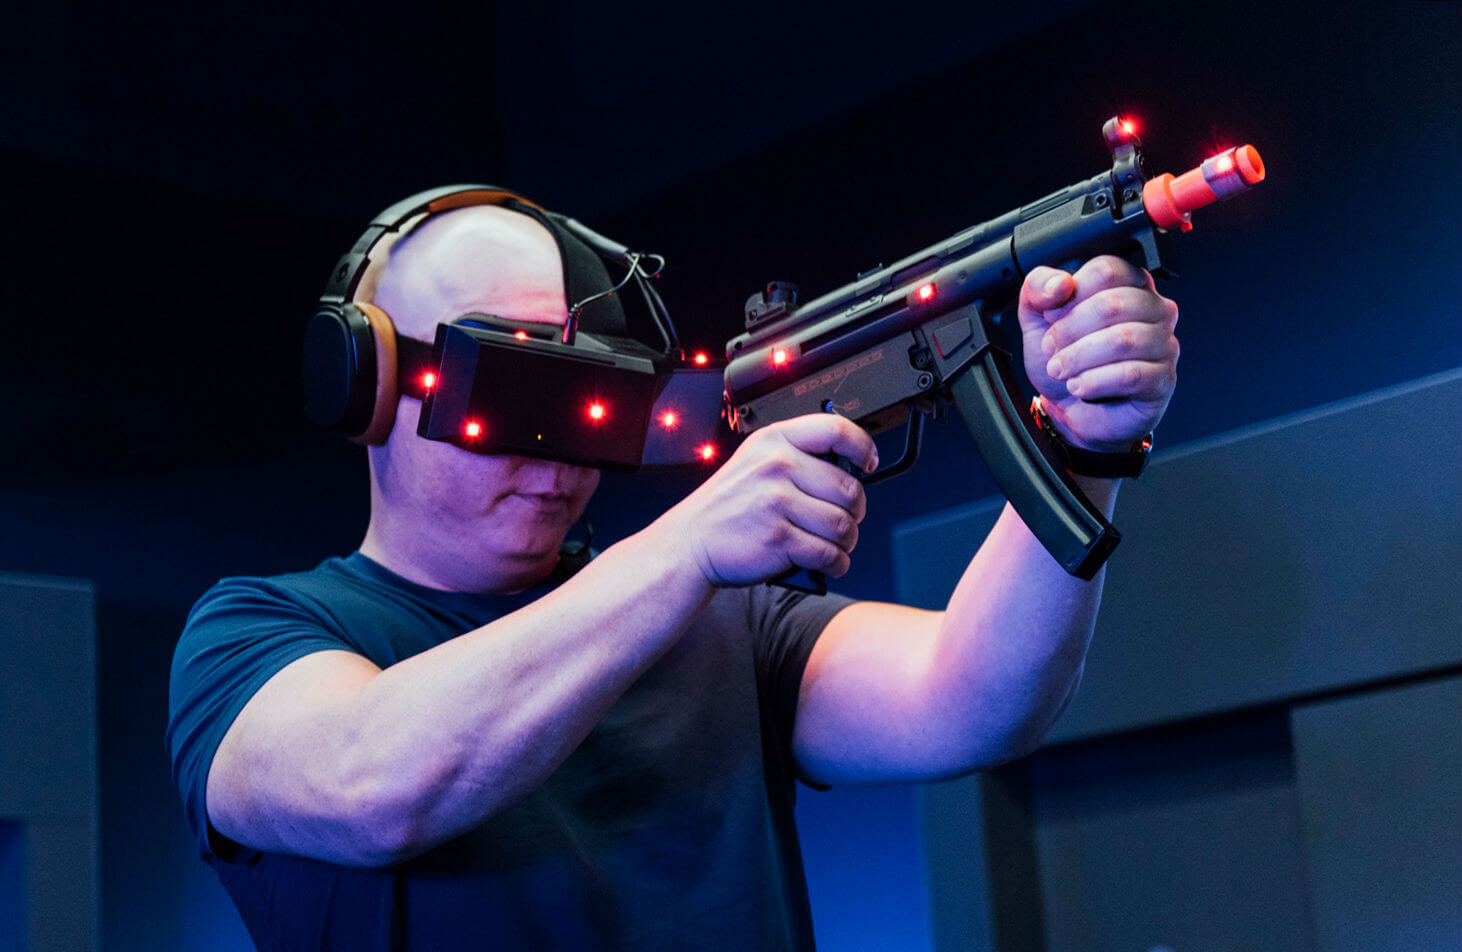 Playing John Wick in VR. 